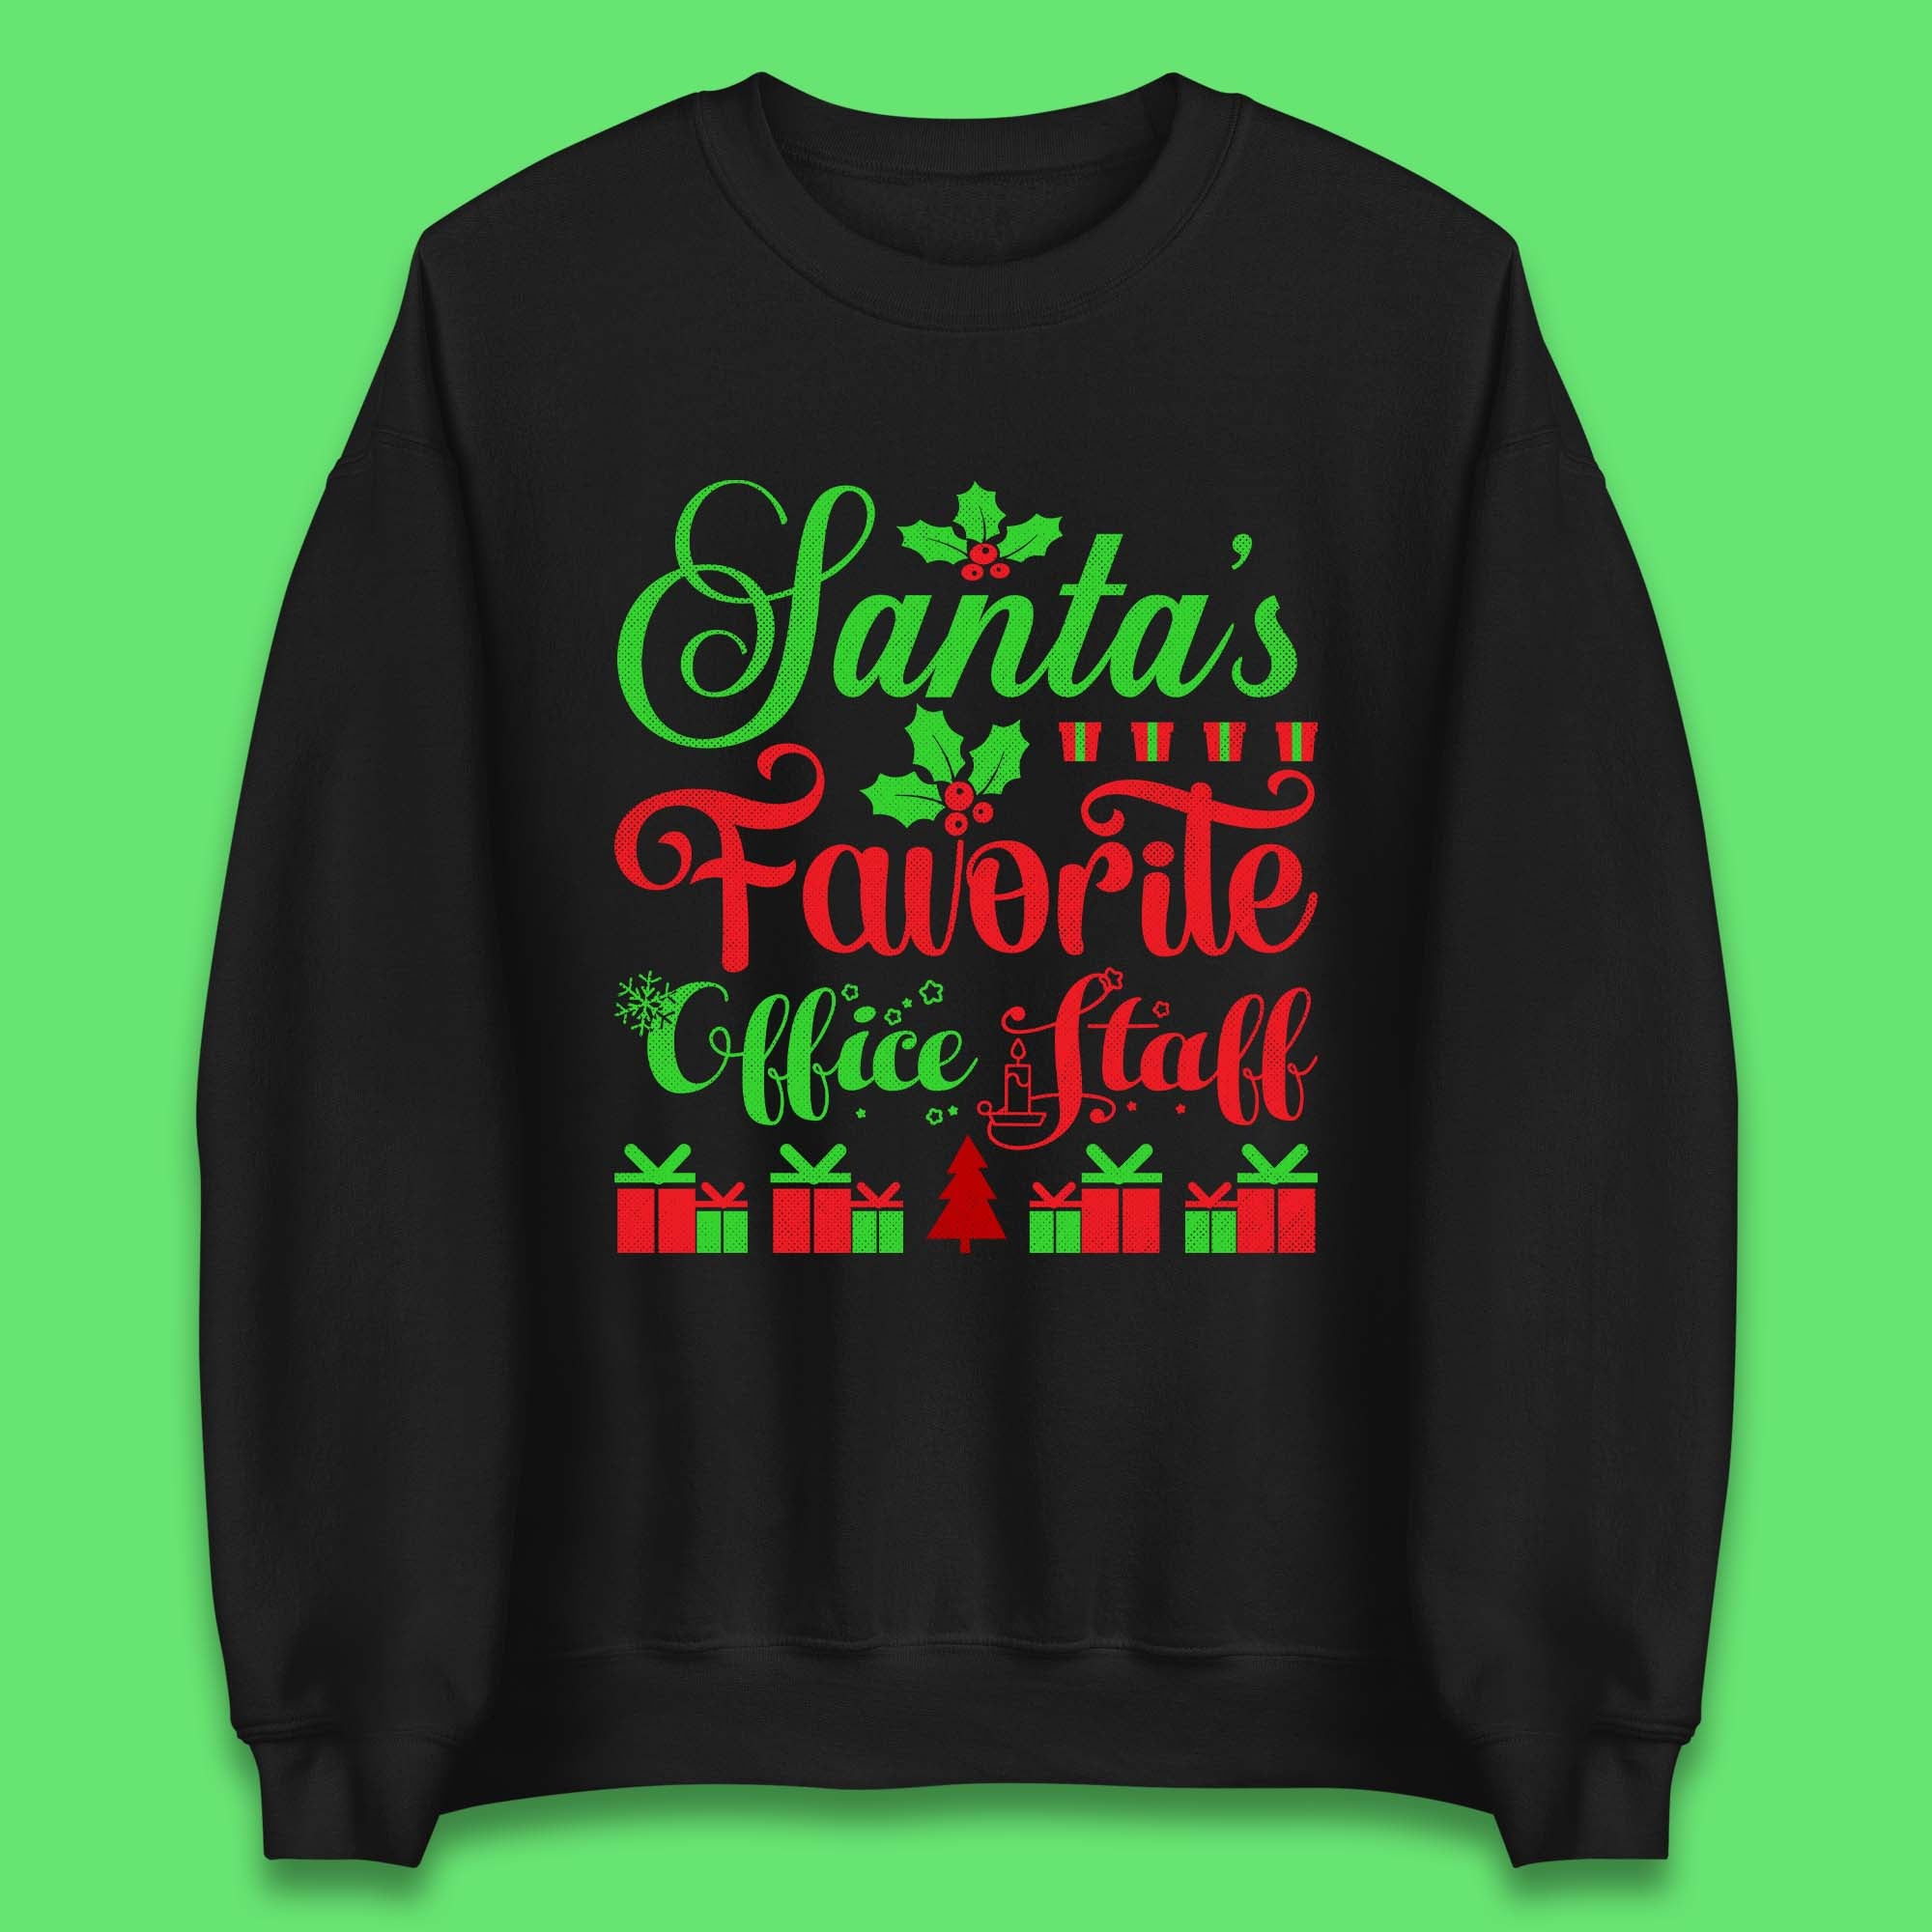 Office Staff Christmas Unisex Sweatshirt